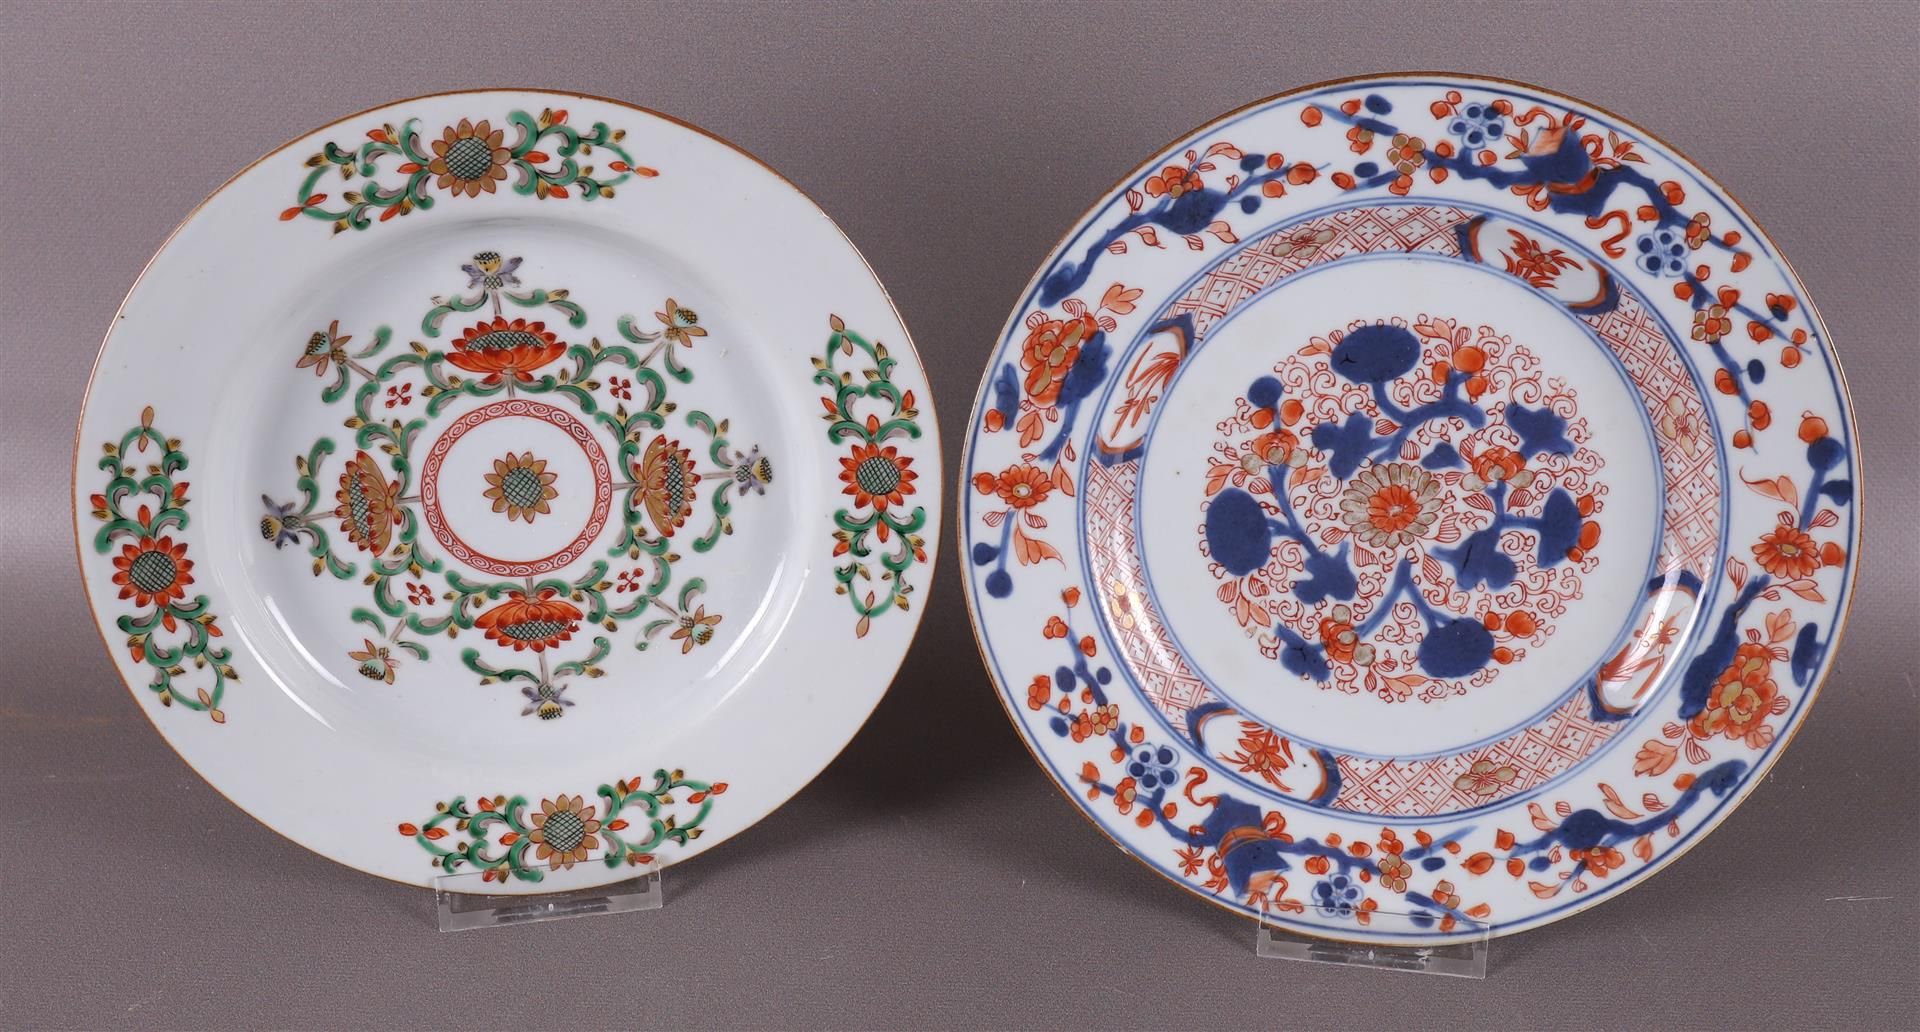 A porcelain Chinese Imari plate, China, 18th century.